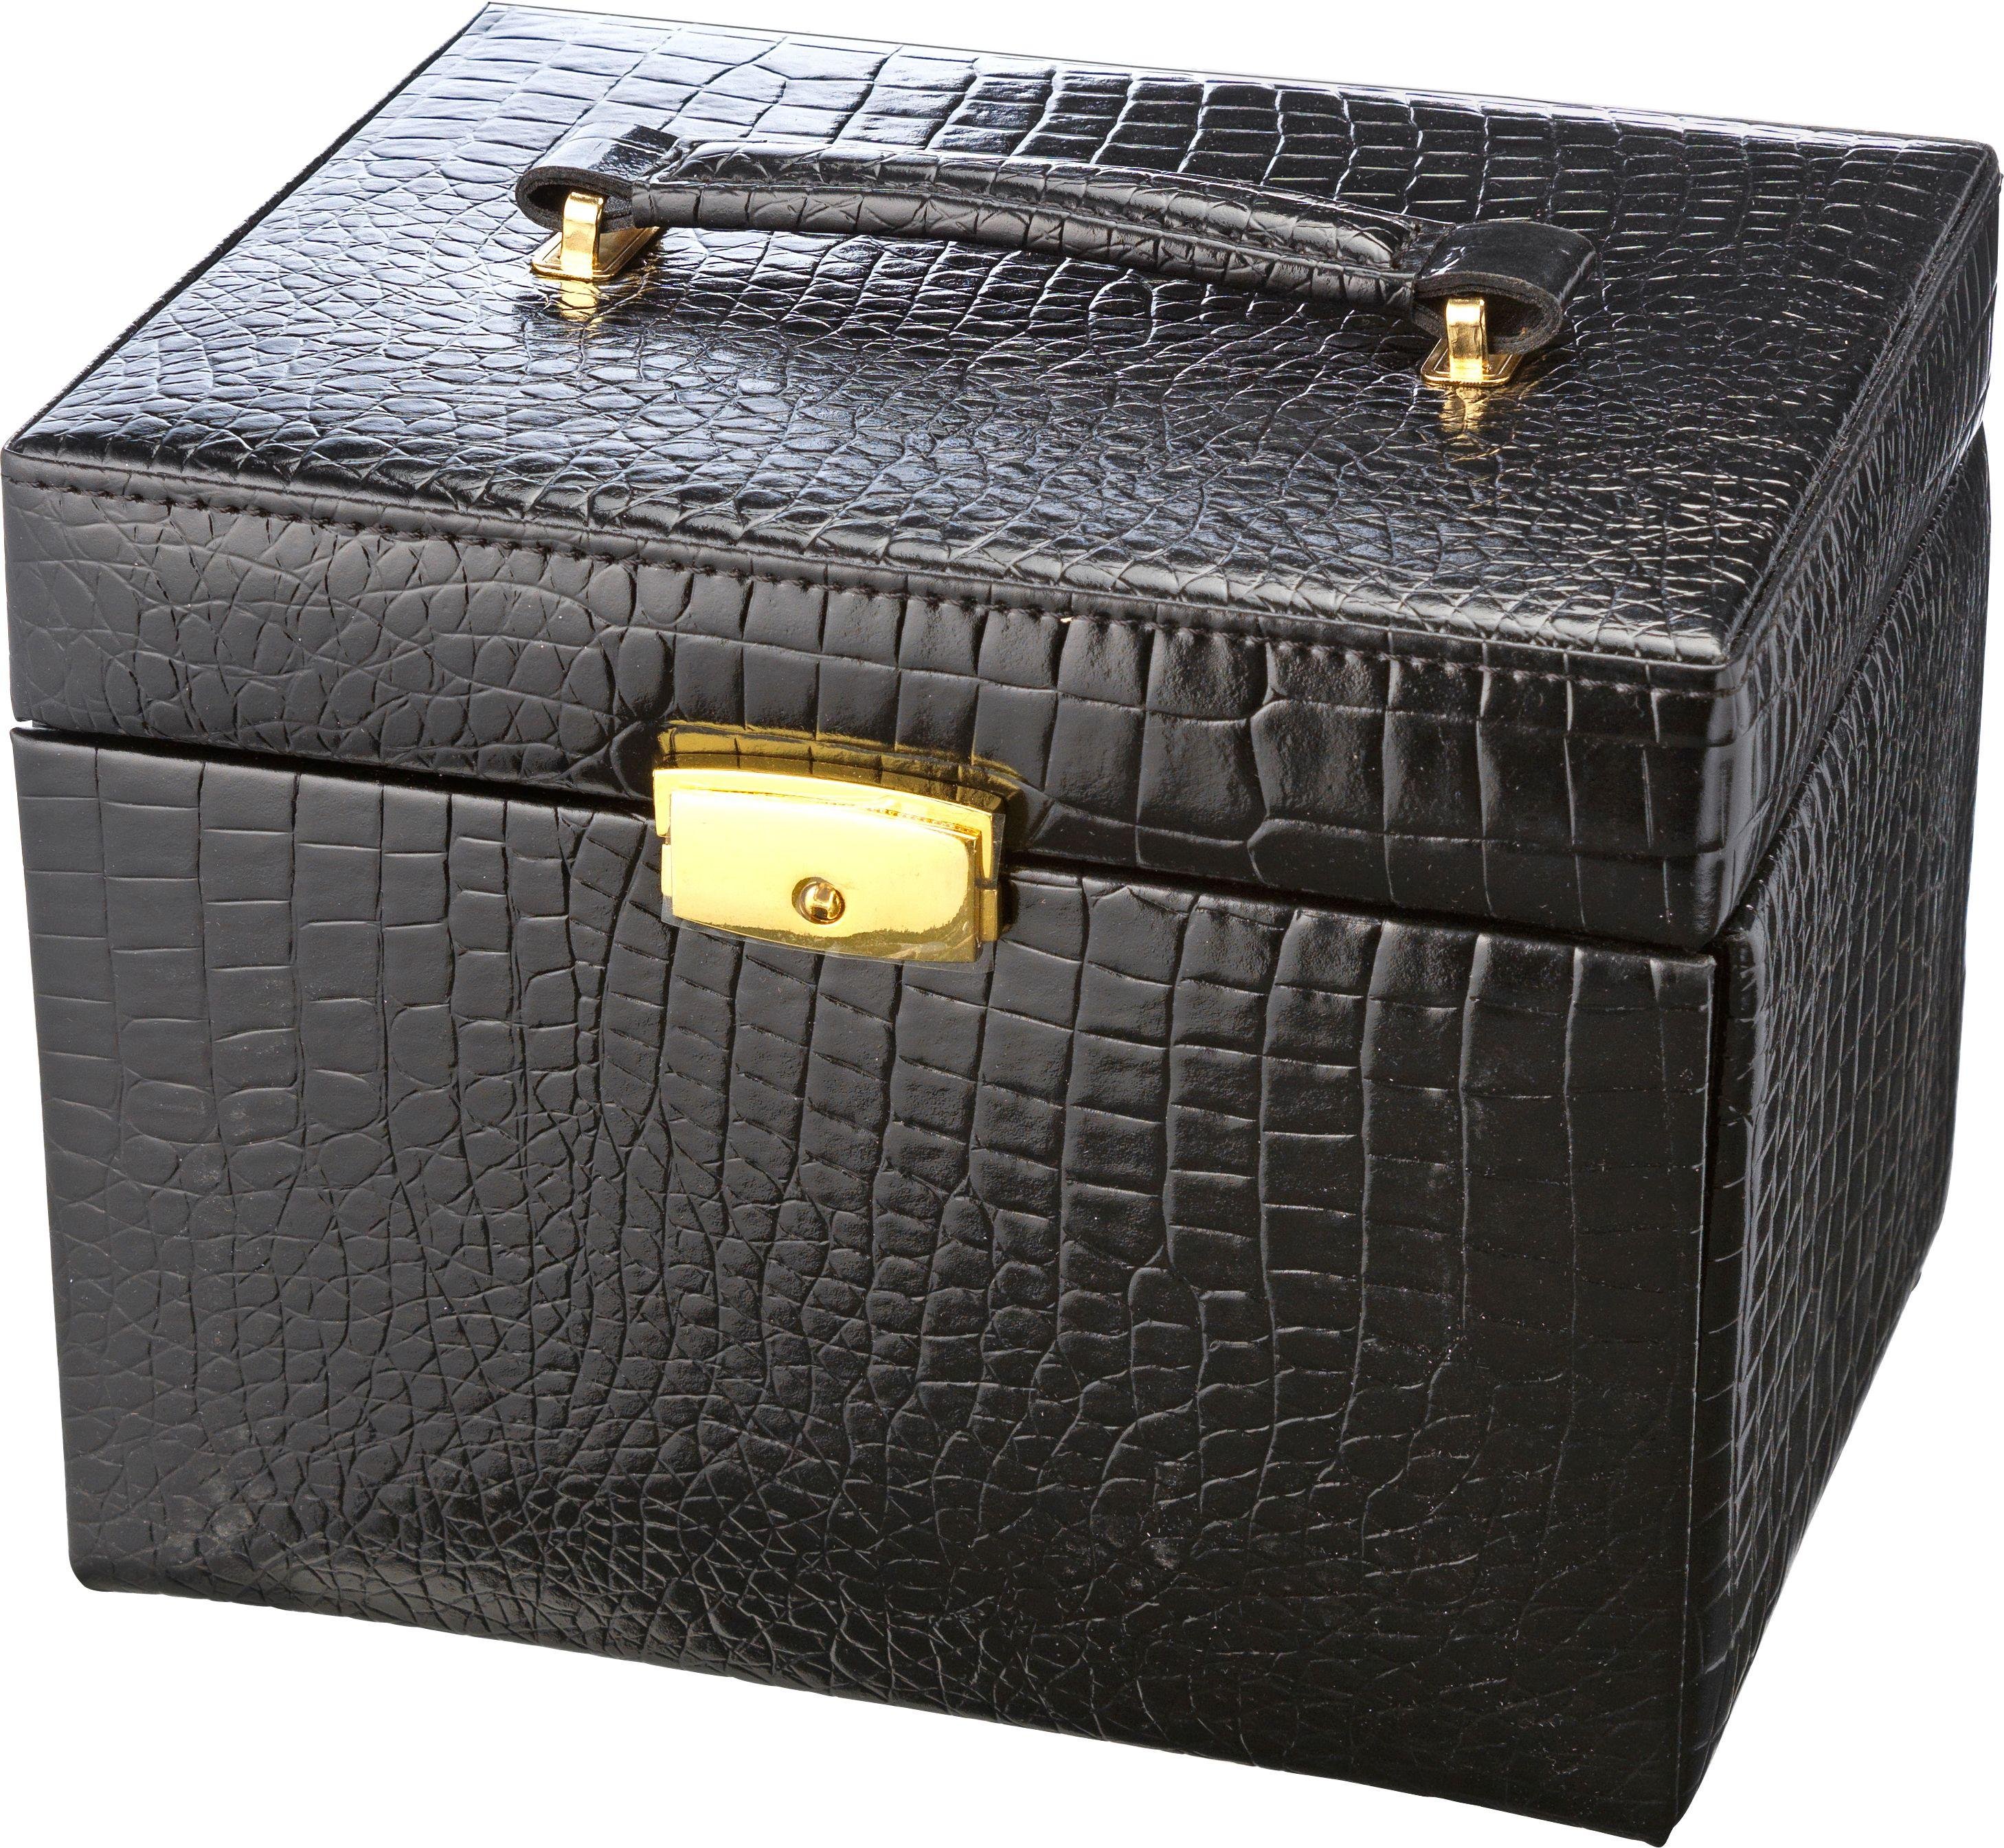 Buy Black Crocodile Small Four Drawer Jewellery Box at Argos.co.uk ...